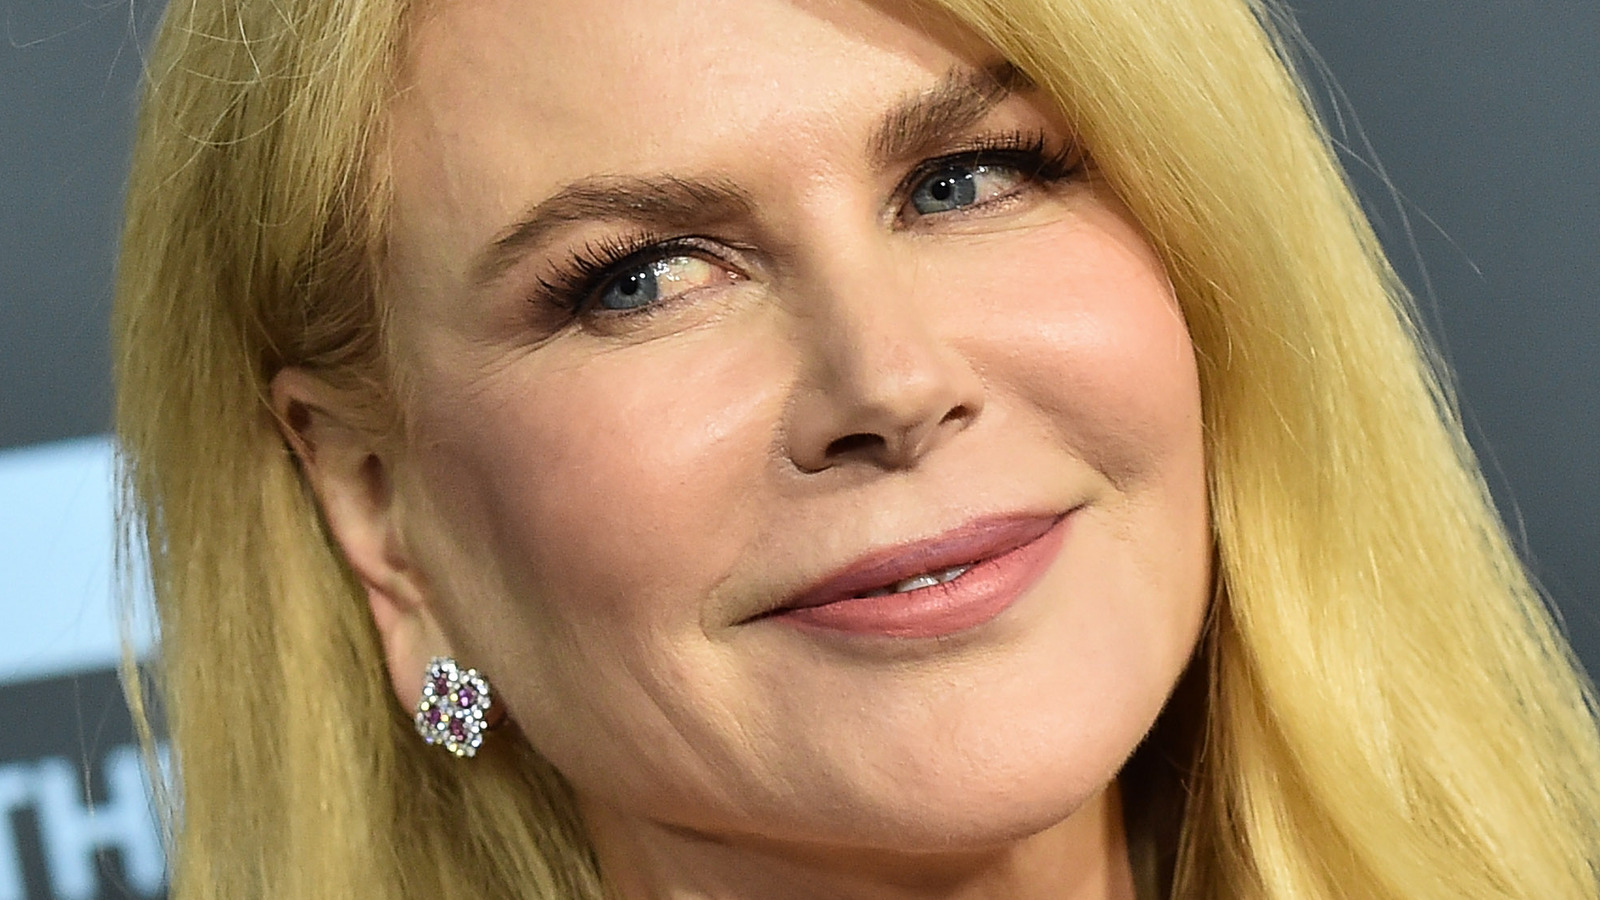 Roar': Nicole Kidman, Cynthia Erivo, Merritt Wever & Alison Brie To Star In  Anthology Series – Deadline